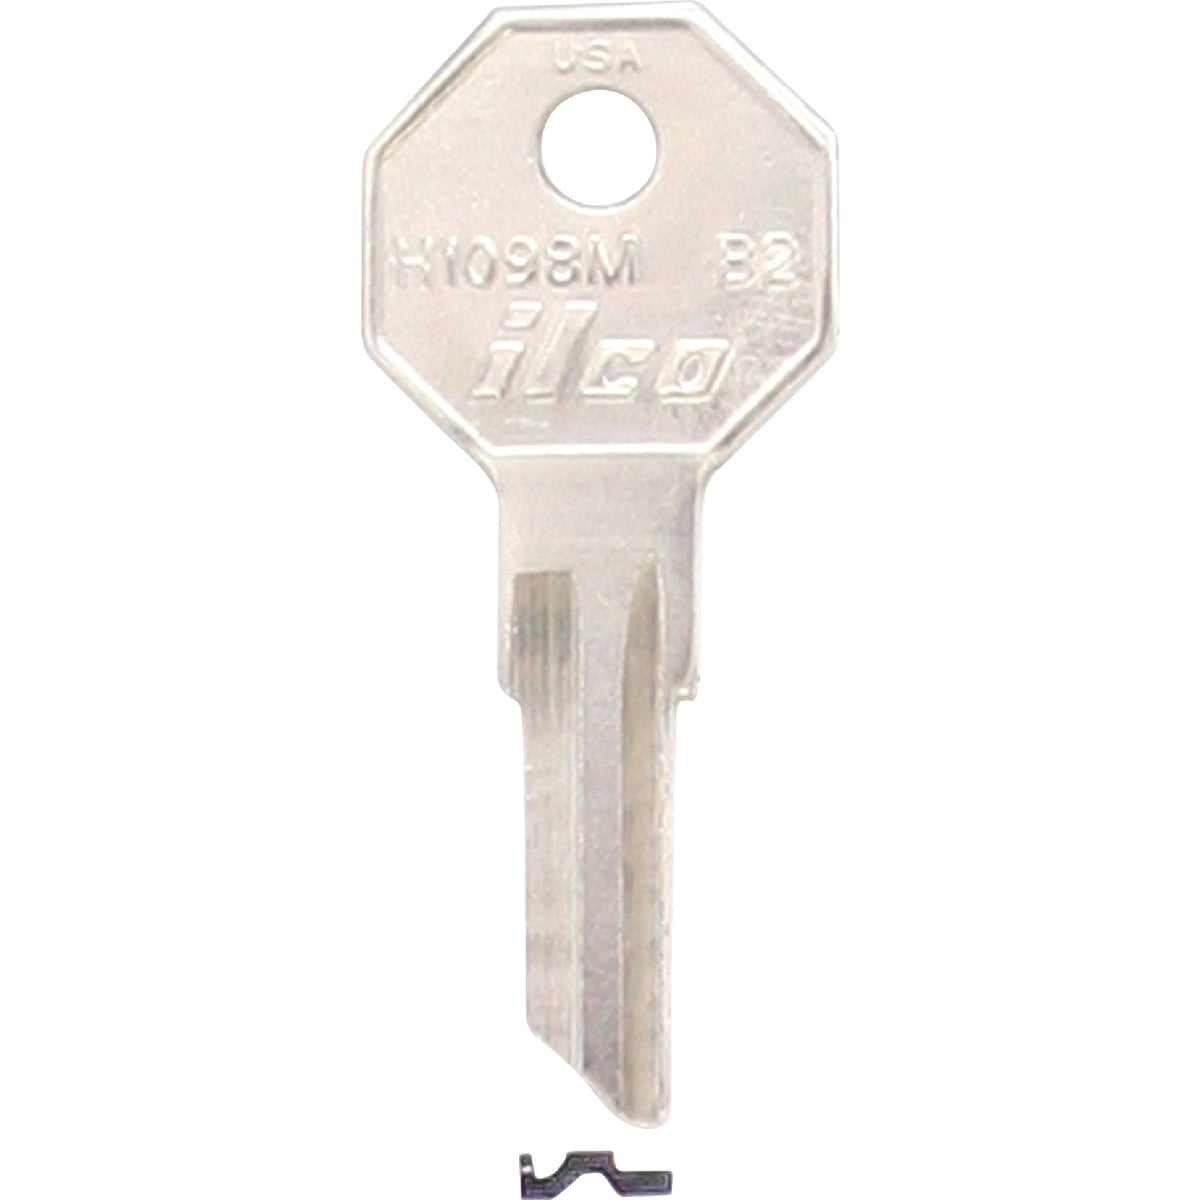 ILCO Briggs Nickel Plated Lawn Mower Key, H1098M (10-Pack)